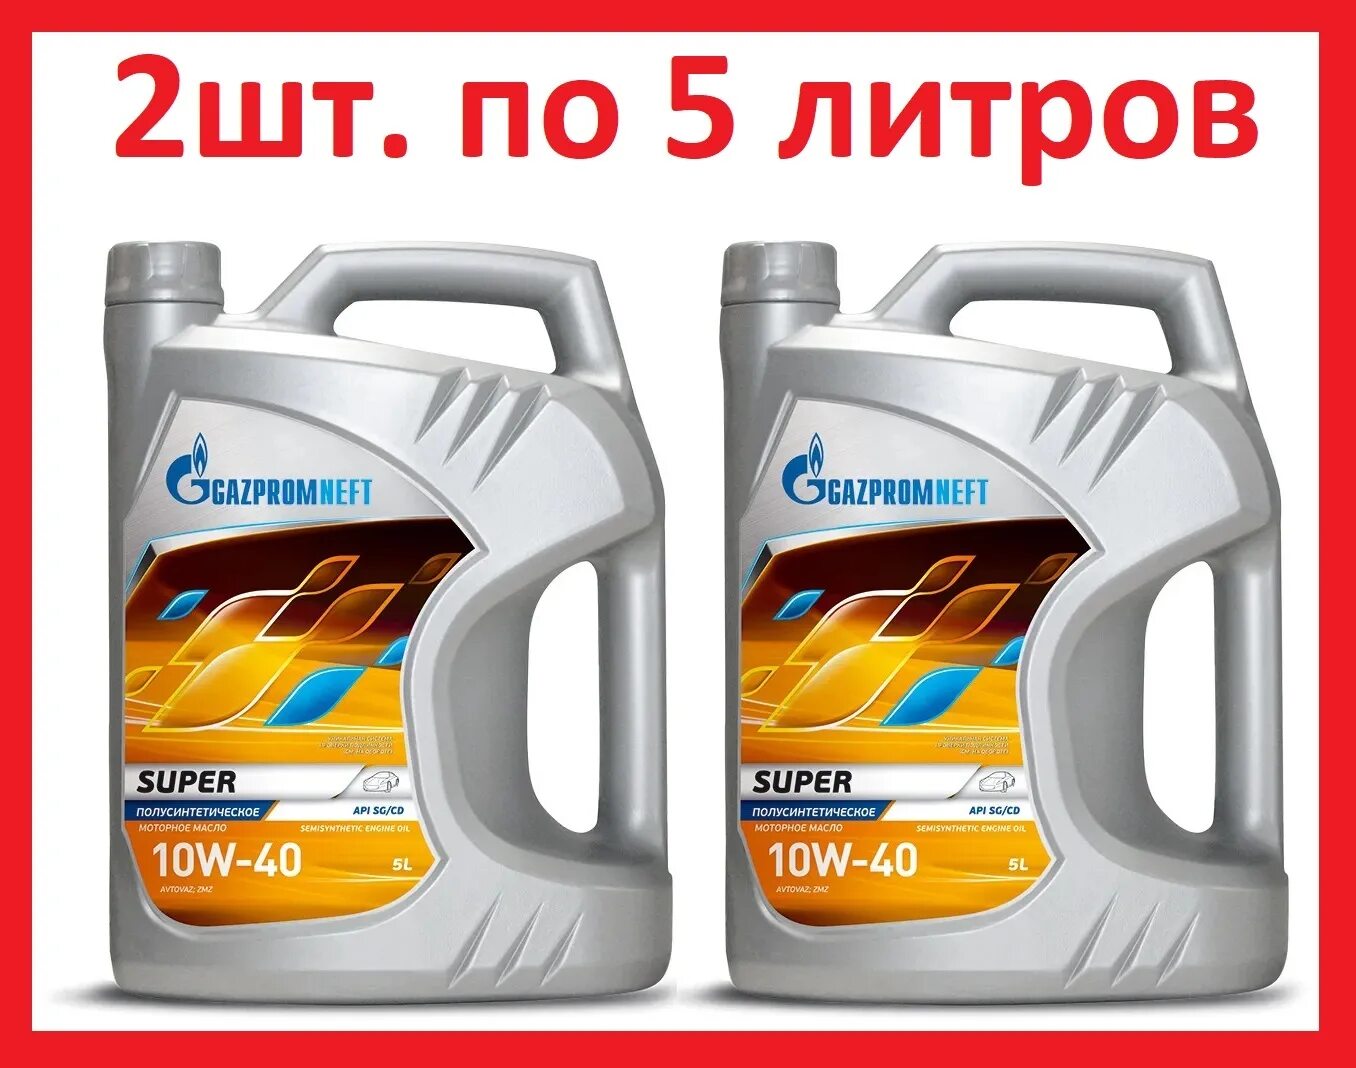 Газпромнефть 10w 40 полусинтетика купить. Масло Газпромнефть 10w 40.